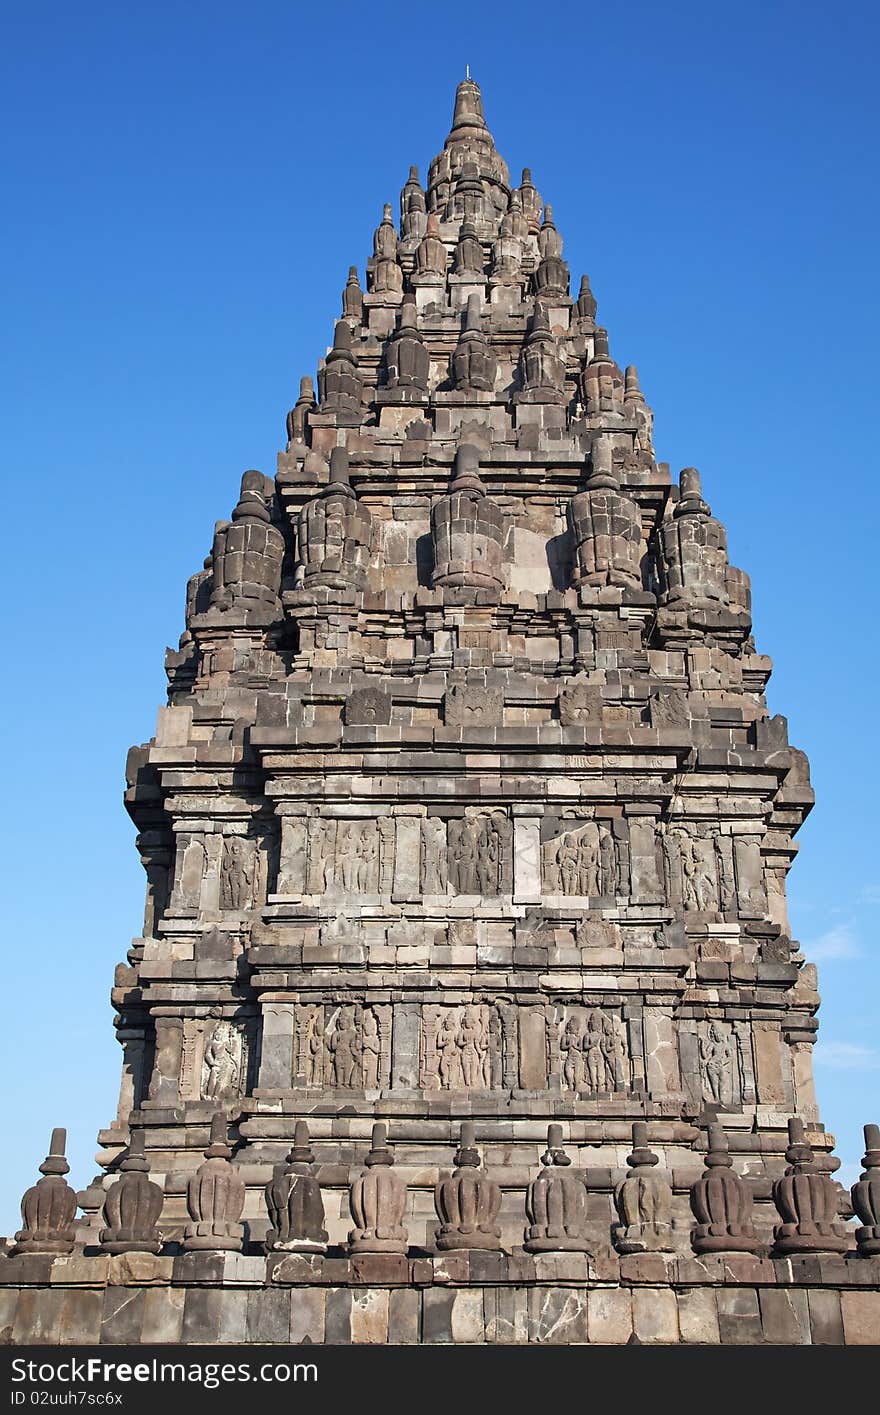 Stupa in Prambanan temple on Java, Indonesia.